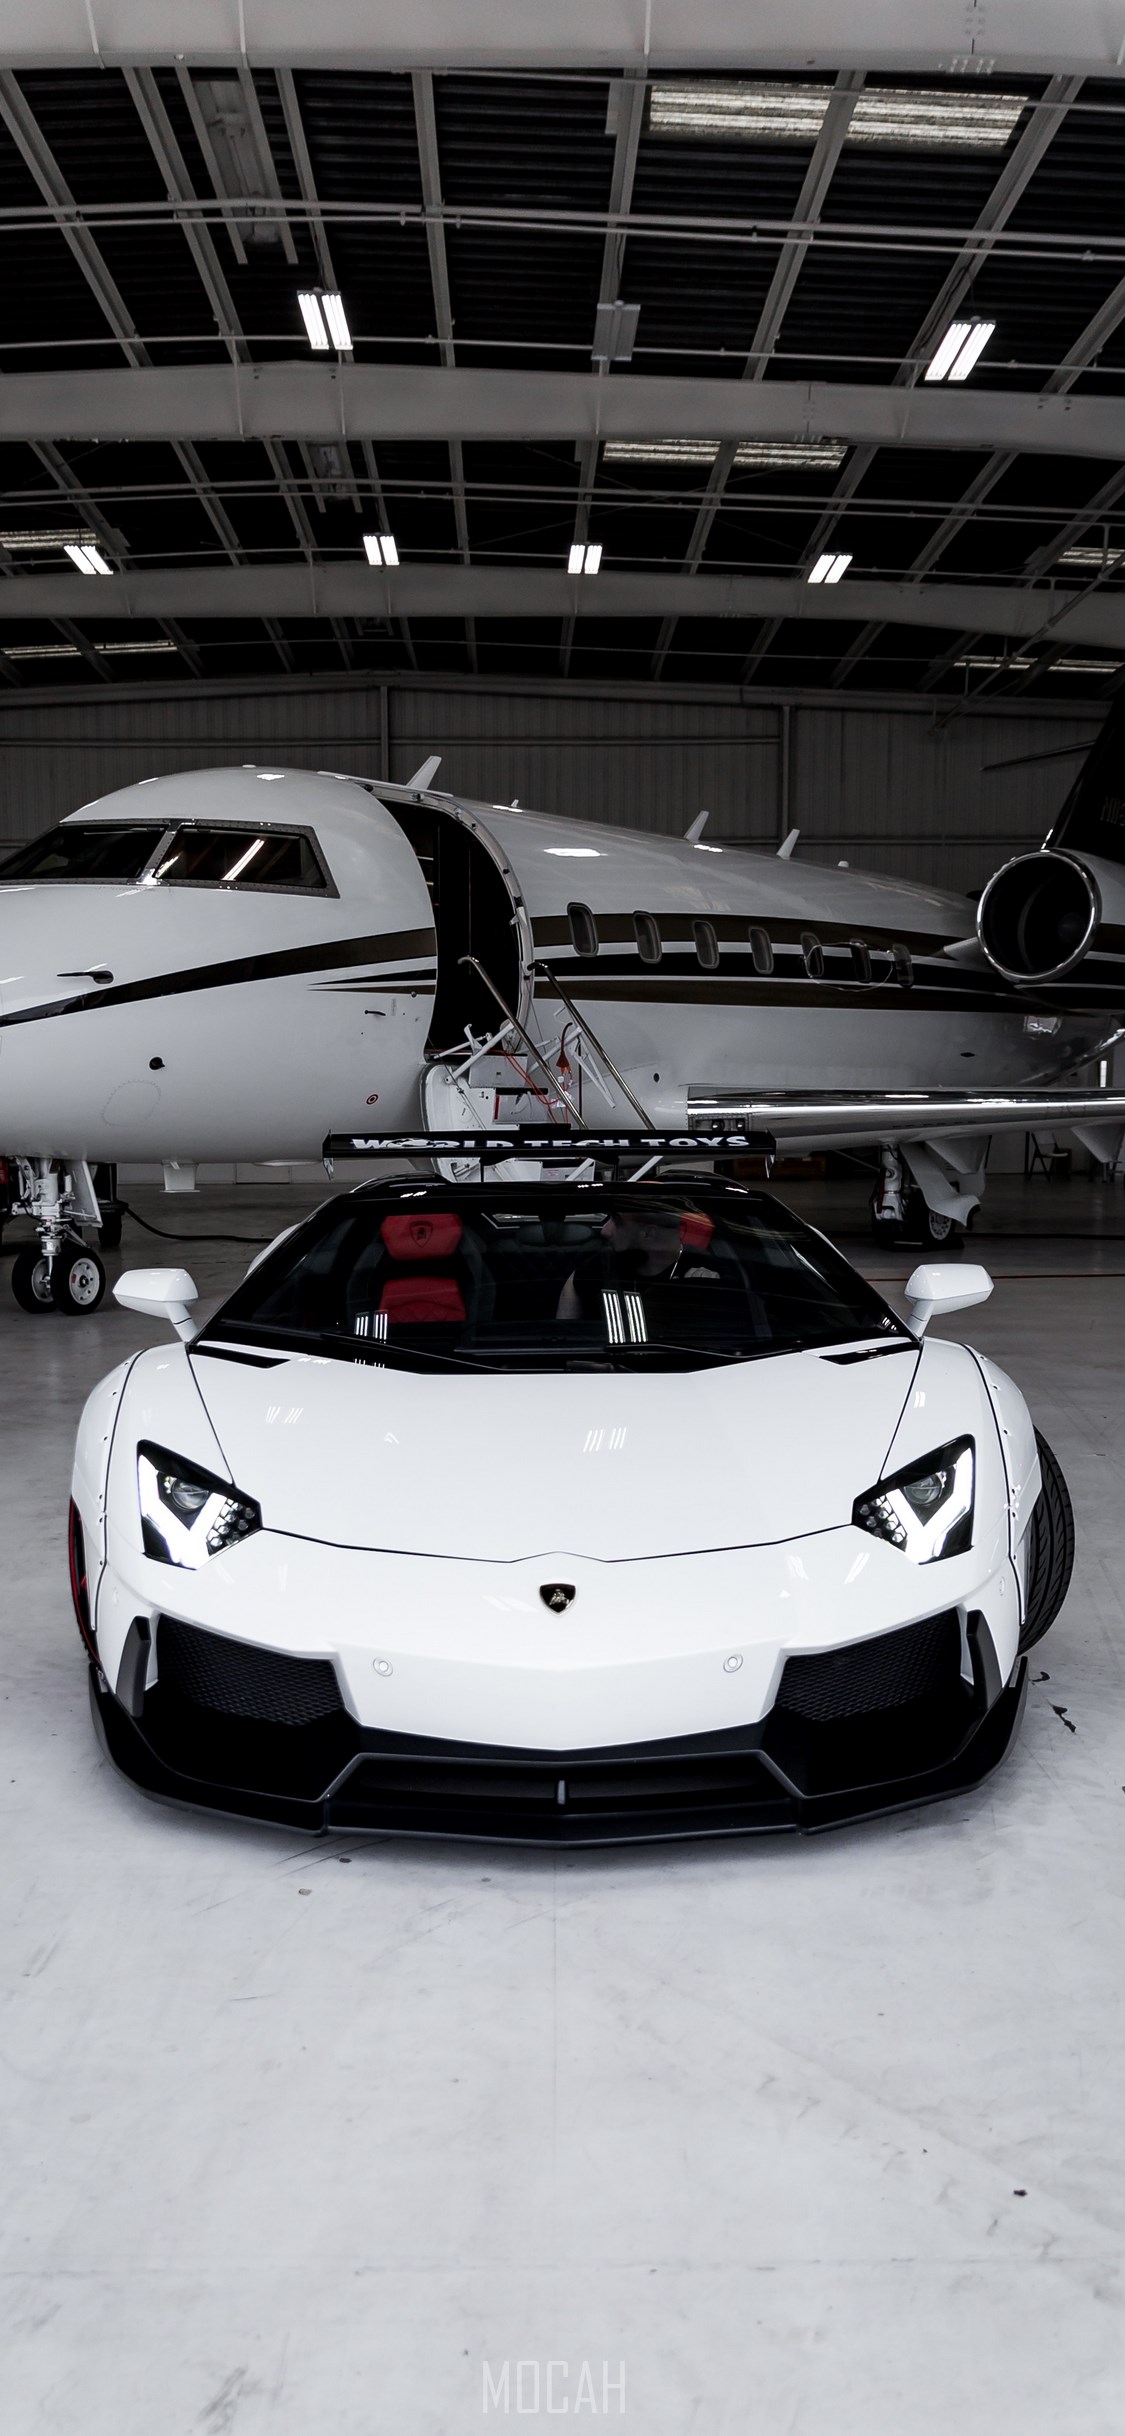 Lamborghini aventador lamborghini car sports car business jet apple iphone pro wallpaper full hd x